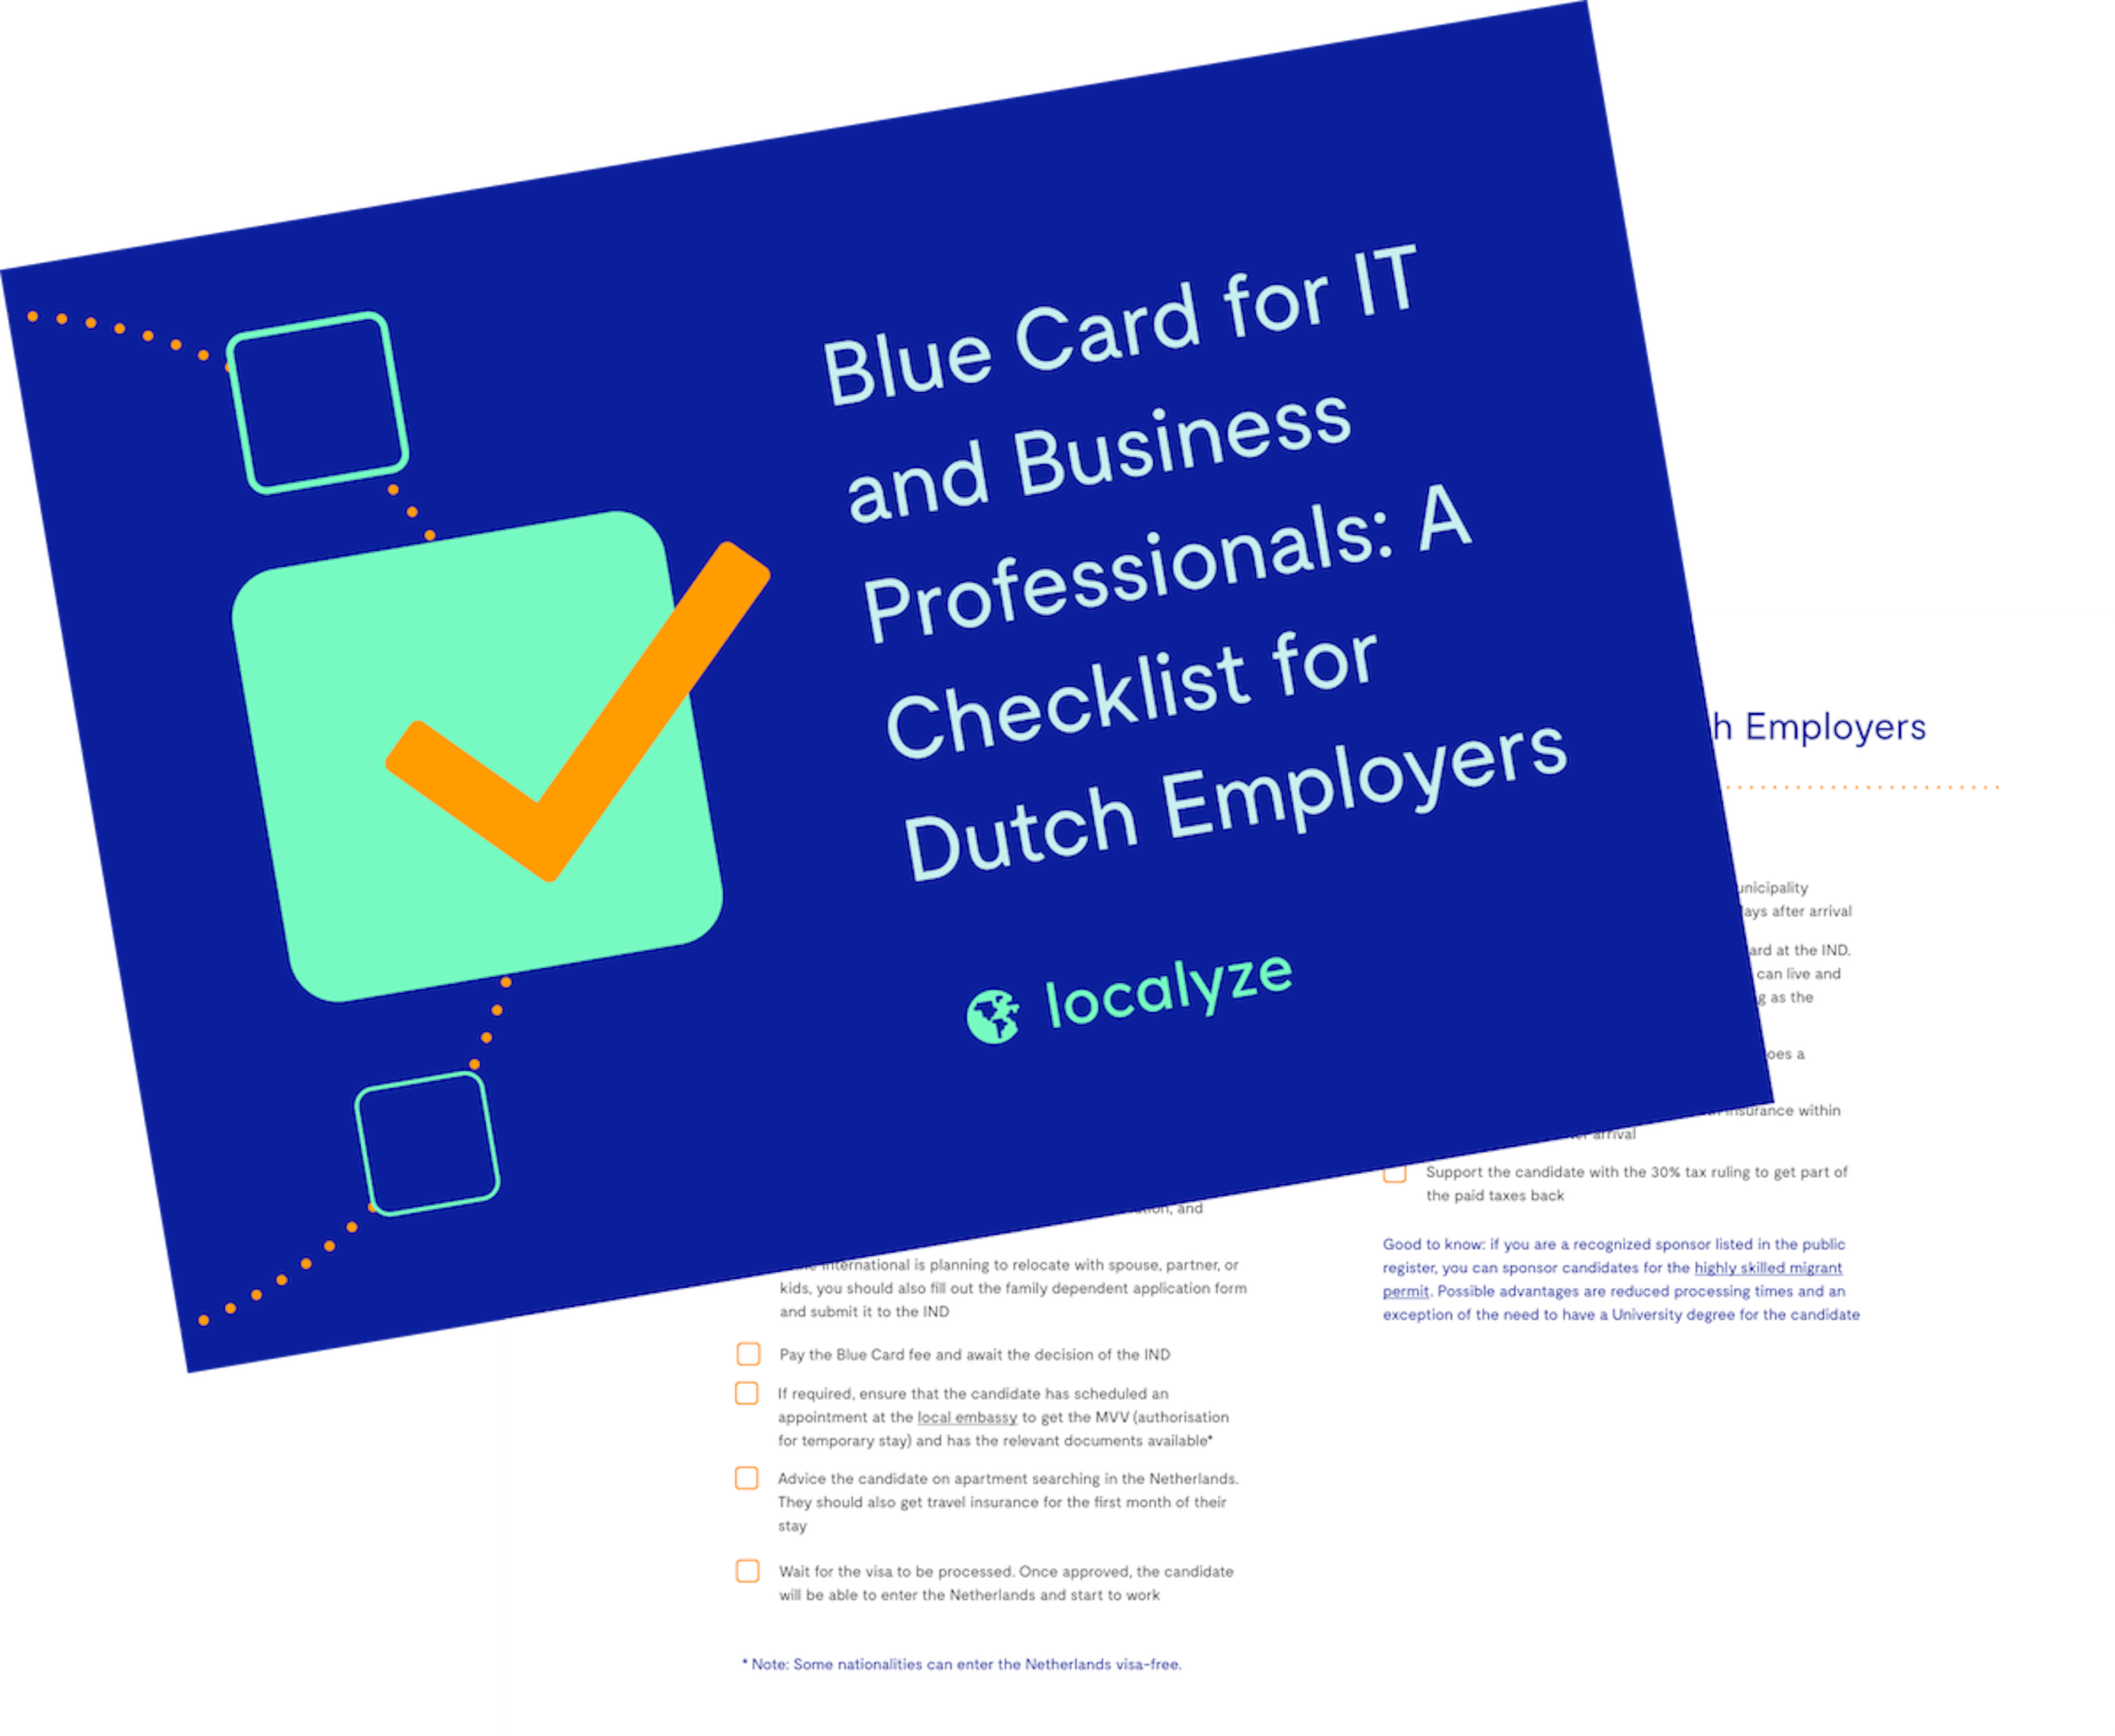 Dutch Employer Checklist: Blue Card for IT & Business